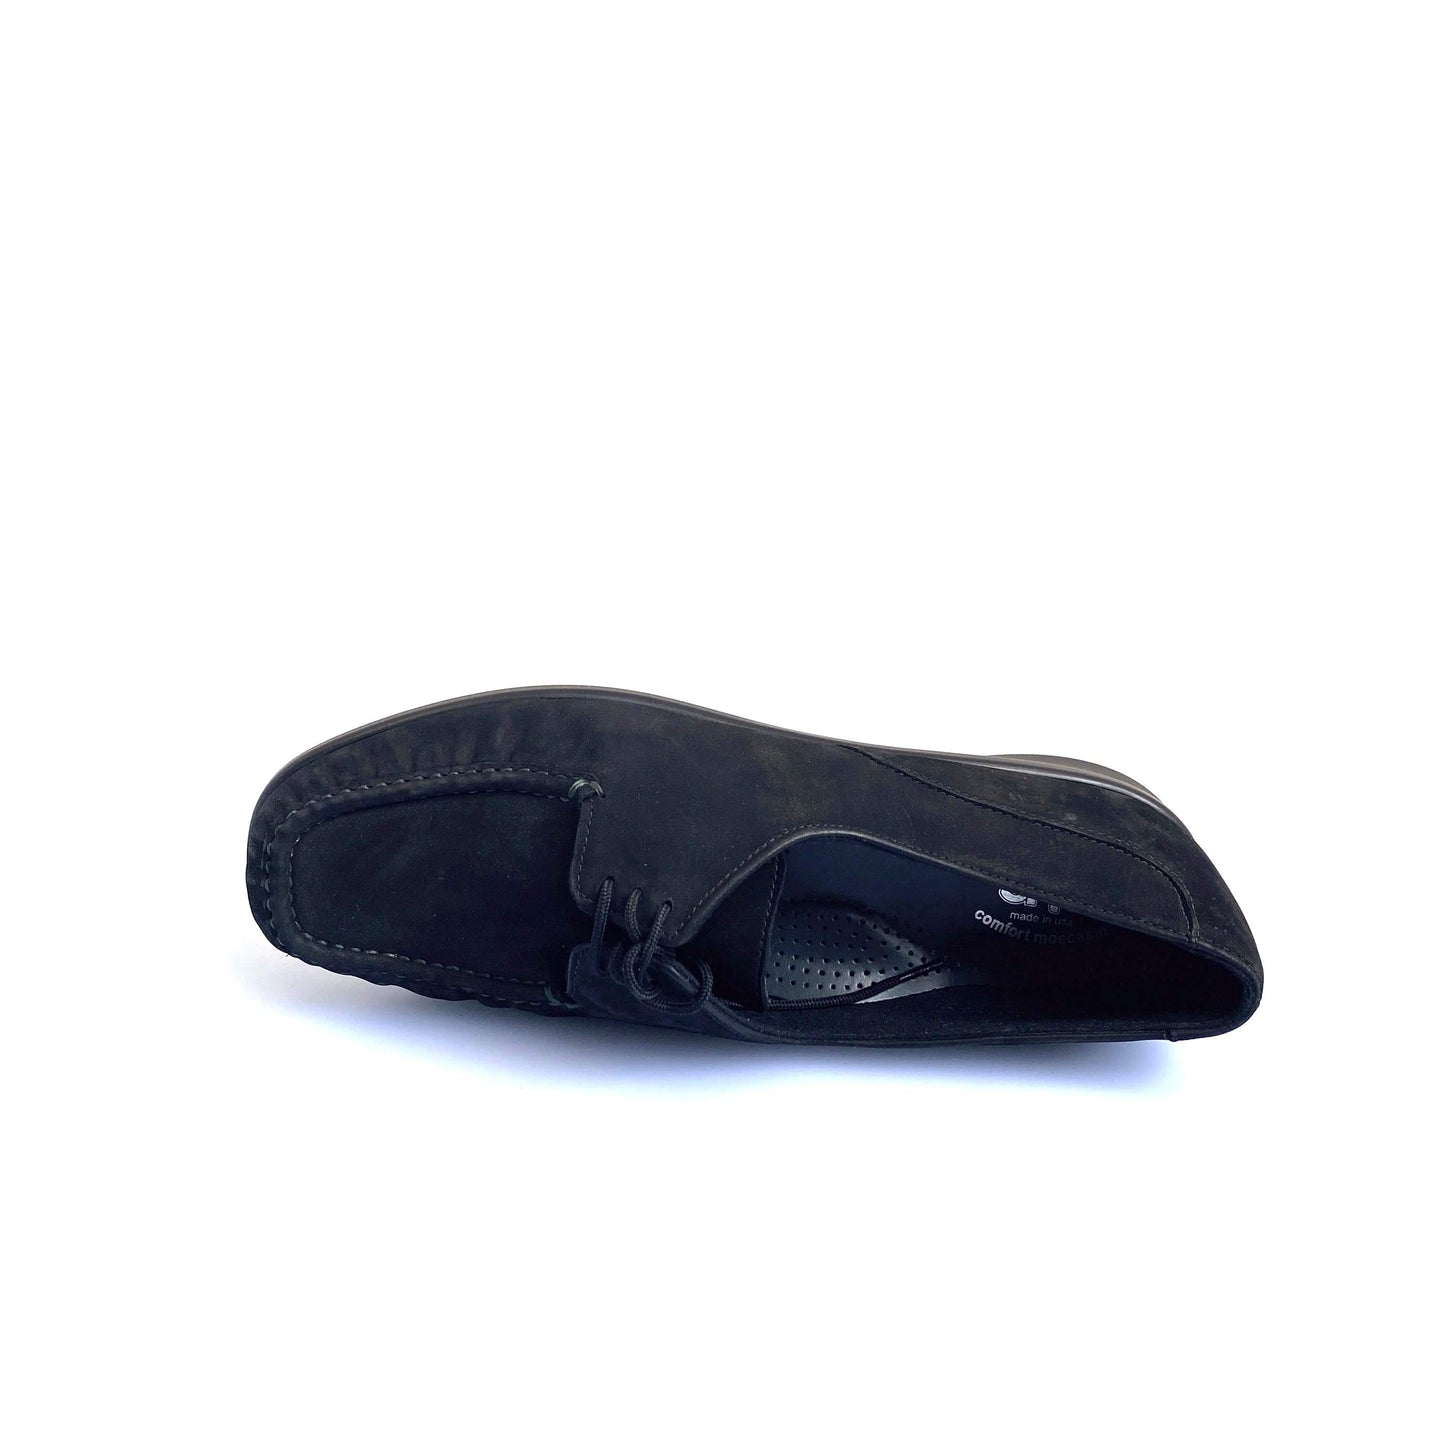 SAS Womens Petra Lace-Up Loafer Size 11 Charcoal Black Leather Shoes Tripad Comfort Walking EUC